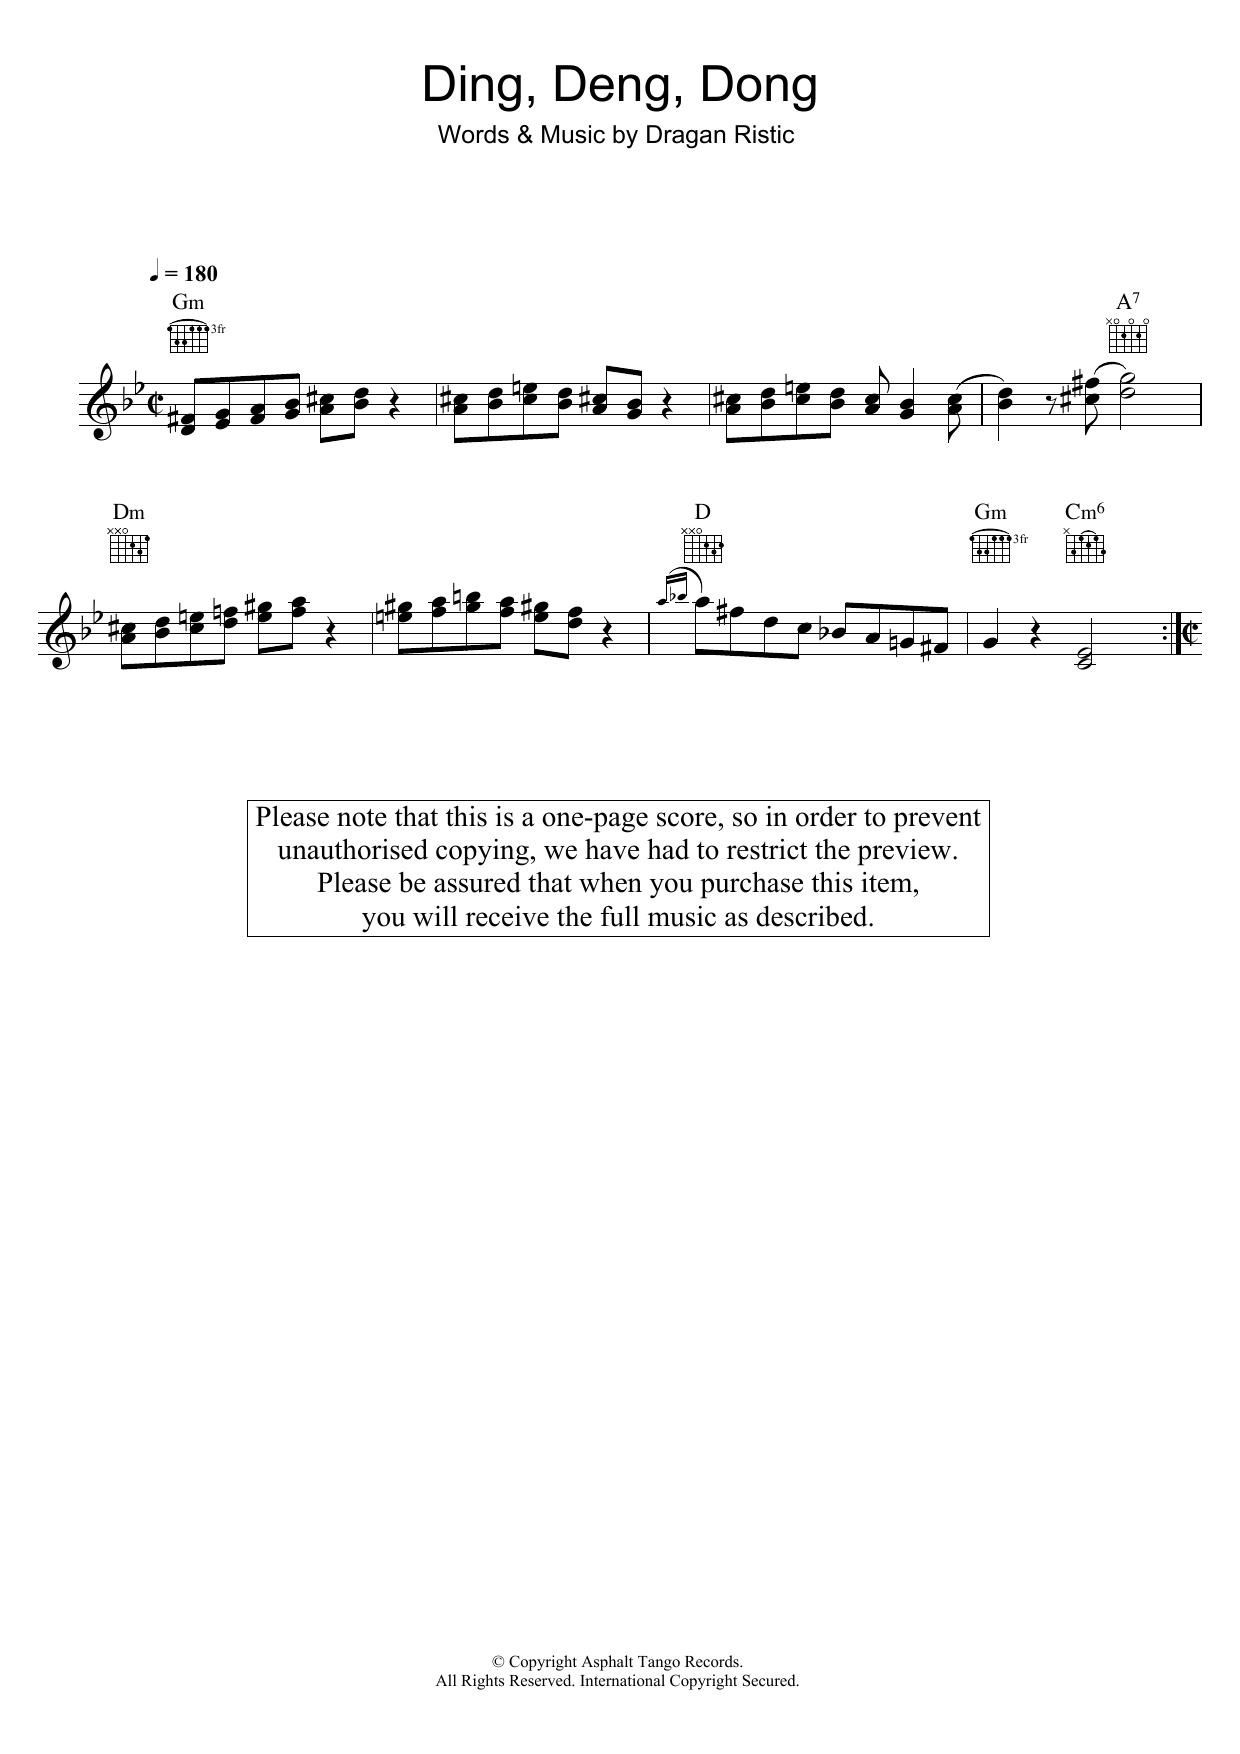 Dragan Ristic Ding, Deng, Dong Sheet Music Notes & Chords for Melody Line, Lyrics & Chords - Download or Print PDF